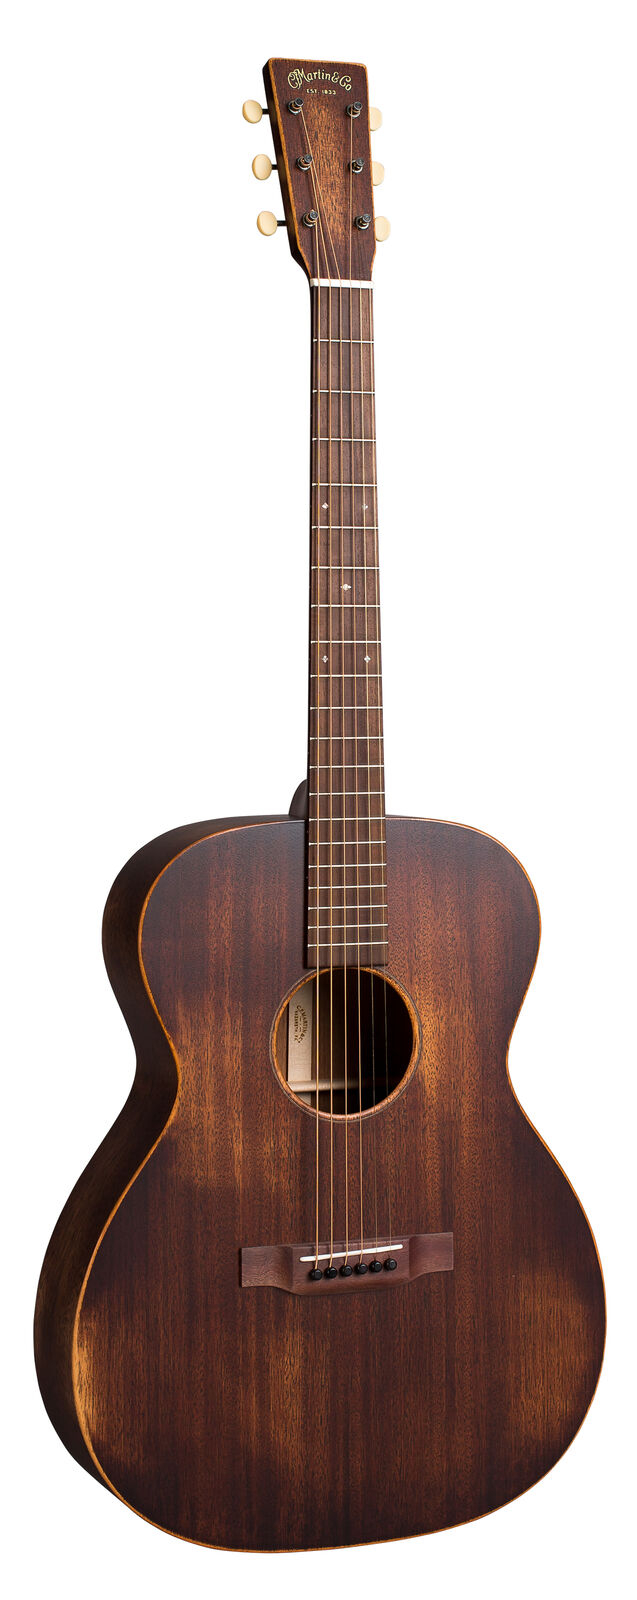 Martin guitar 000-15M StreetMaster® model